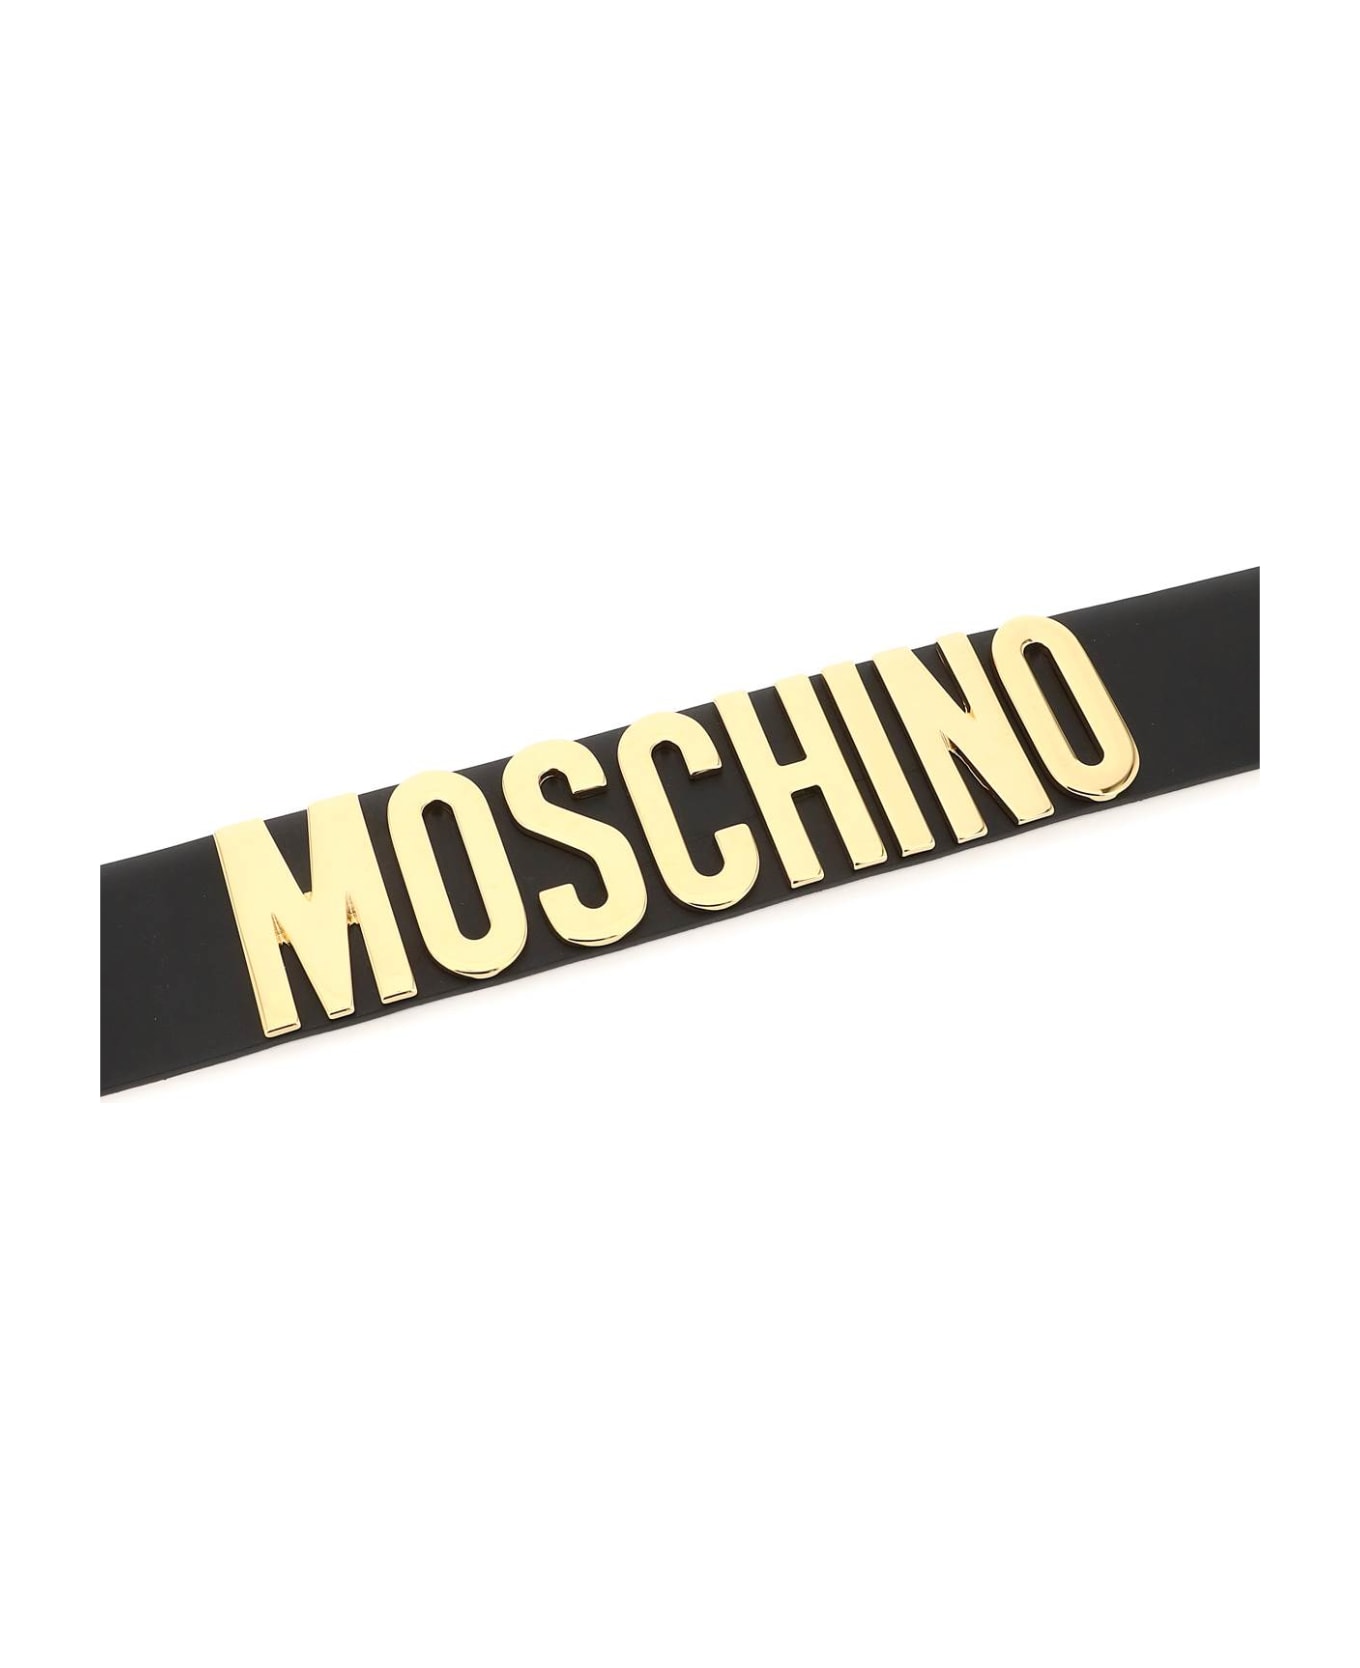 Moschino Logo Lettering Belt - Nero